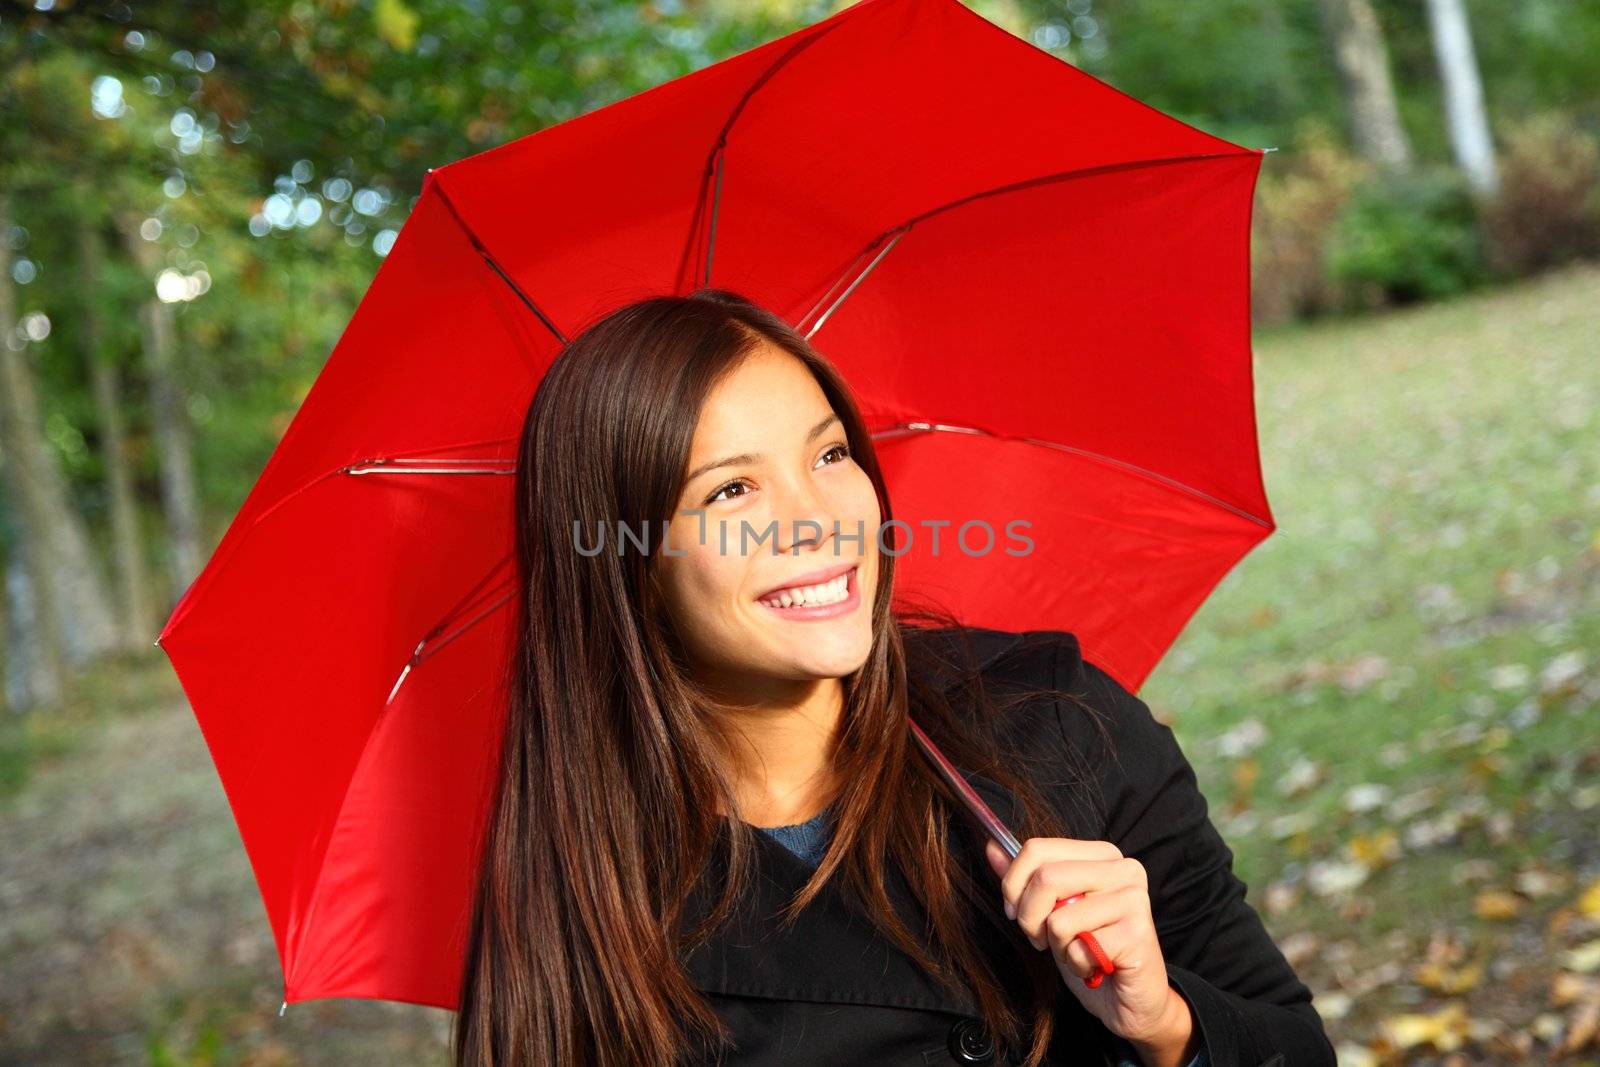 Red umbrella woman by Maridav